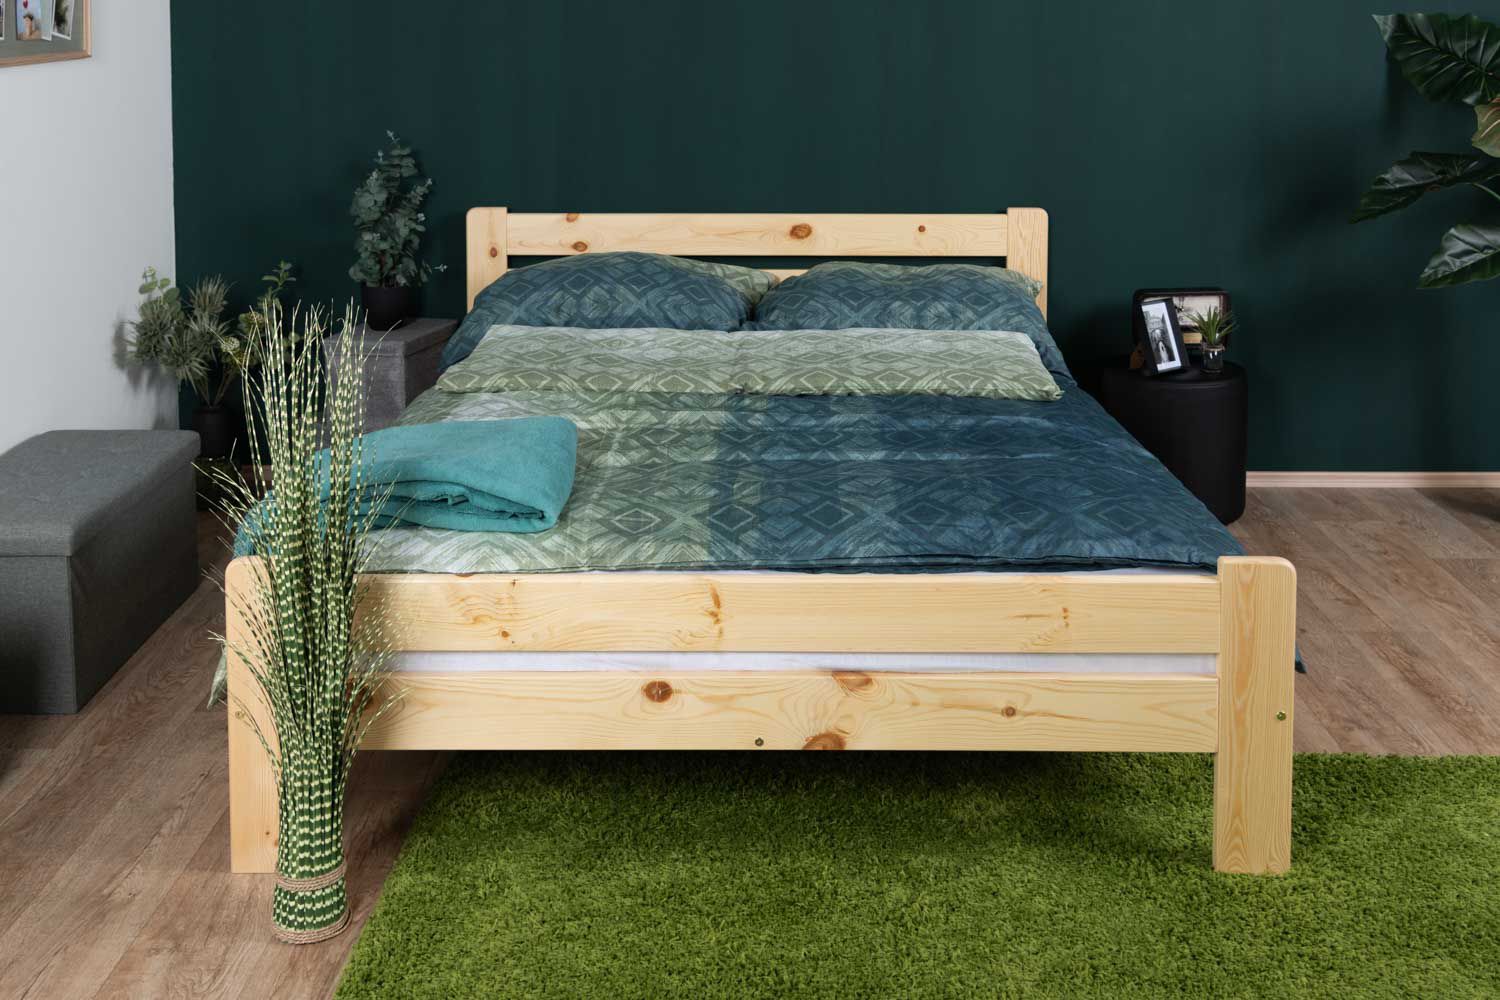 Teenage bed solid, natural pine wood A23, including slatted frame - Measurements 160 x 200 cm